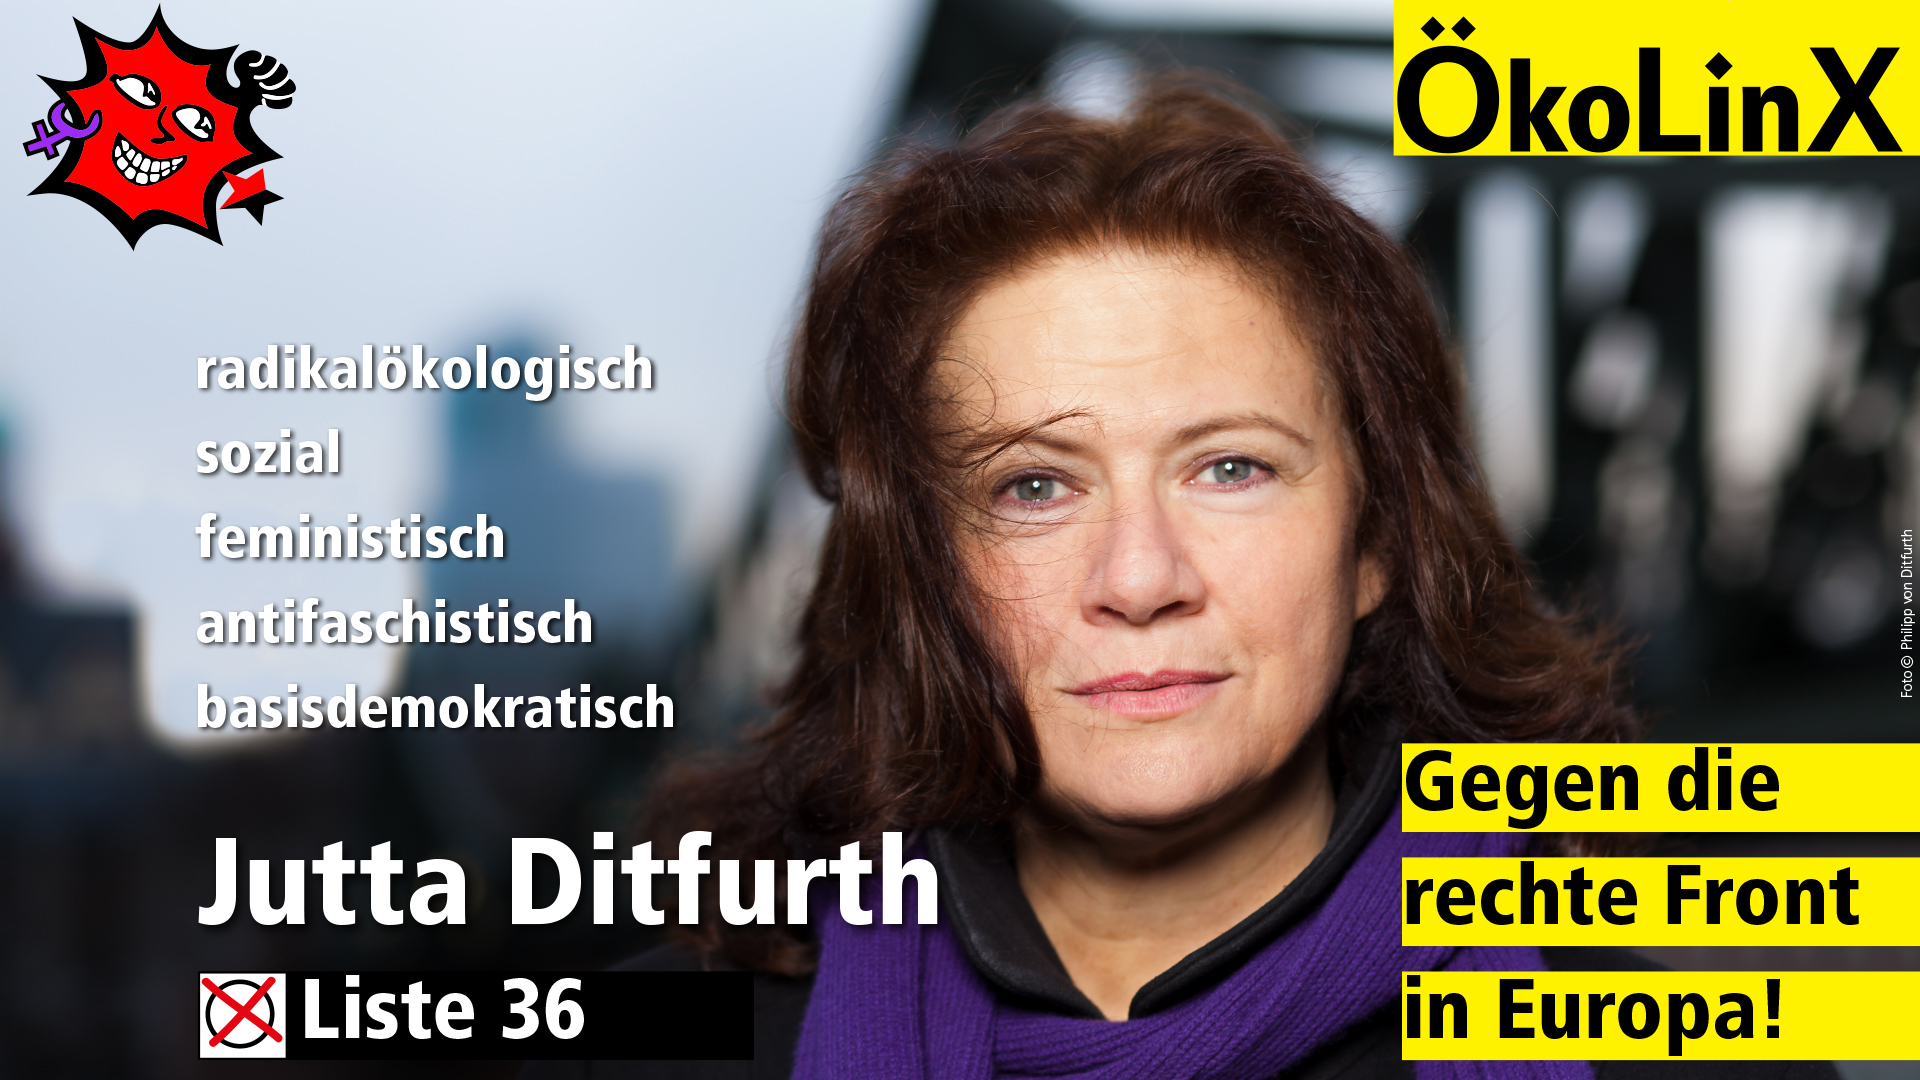 Jutta Ditfurth: Wählt bei der Europawahl ÖkoLinX
 Wahlspot (Rundfunk) 